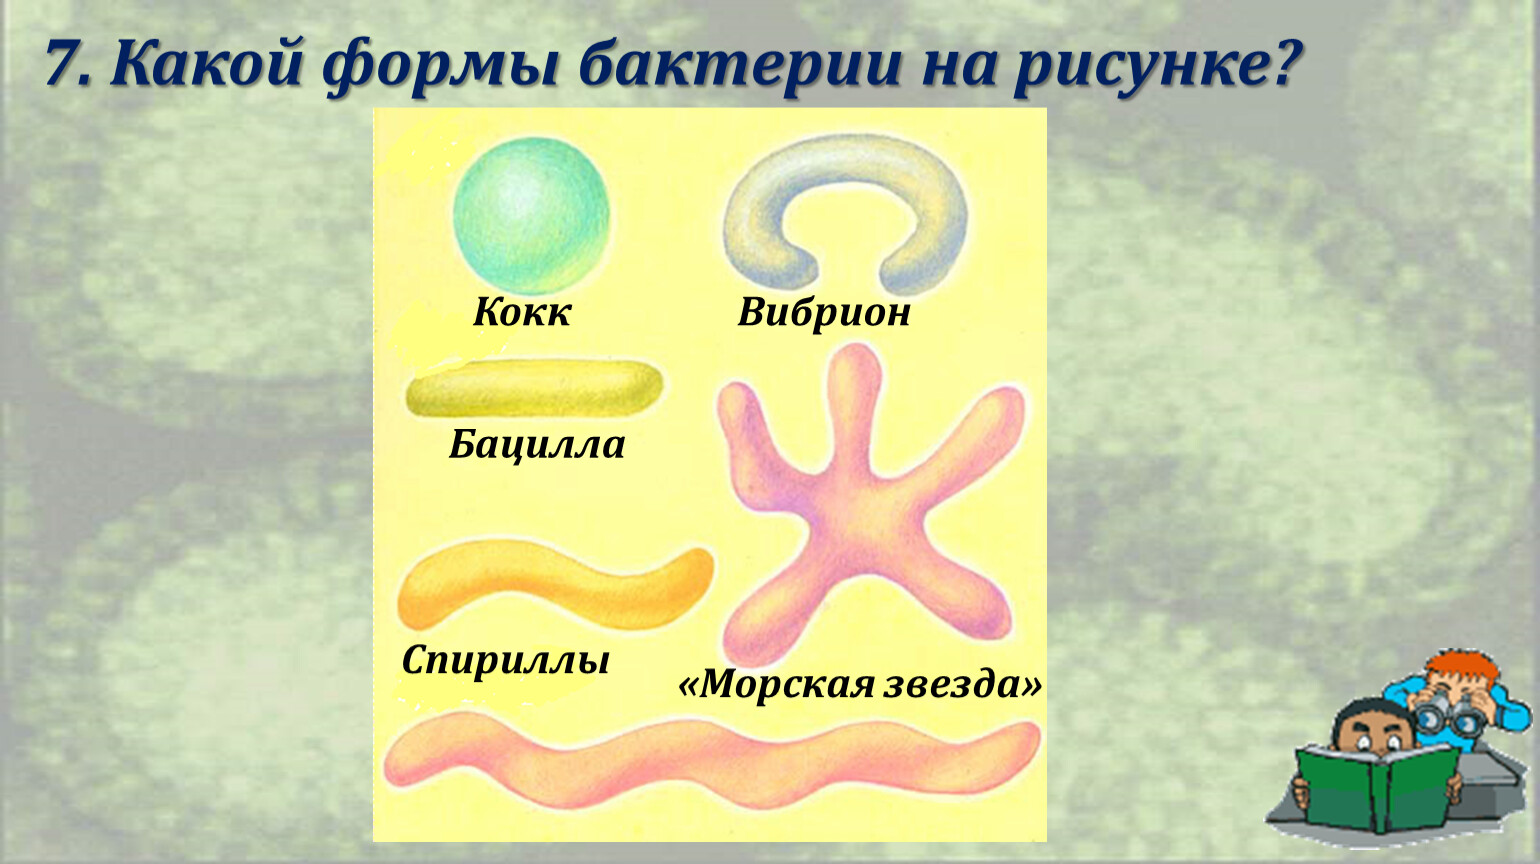 S форма бактерий. Формы бактерий. Форма бактерии сделать своими руками.